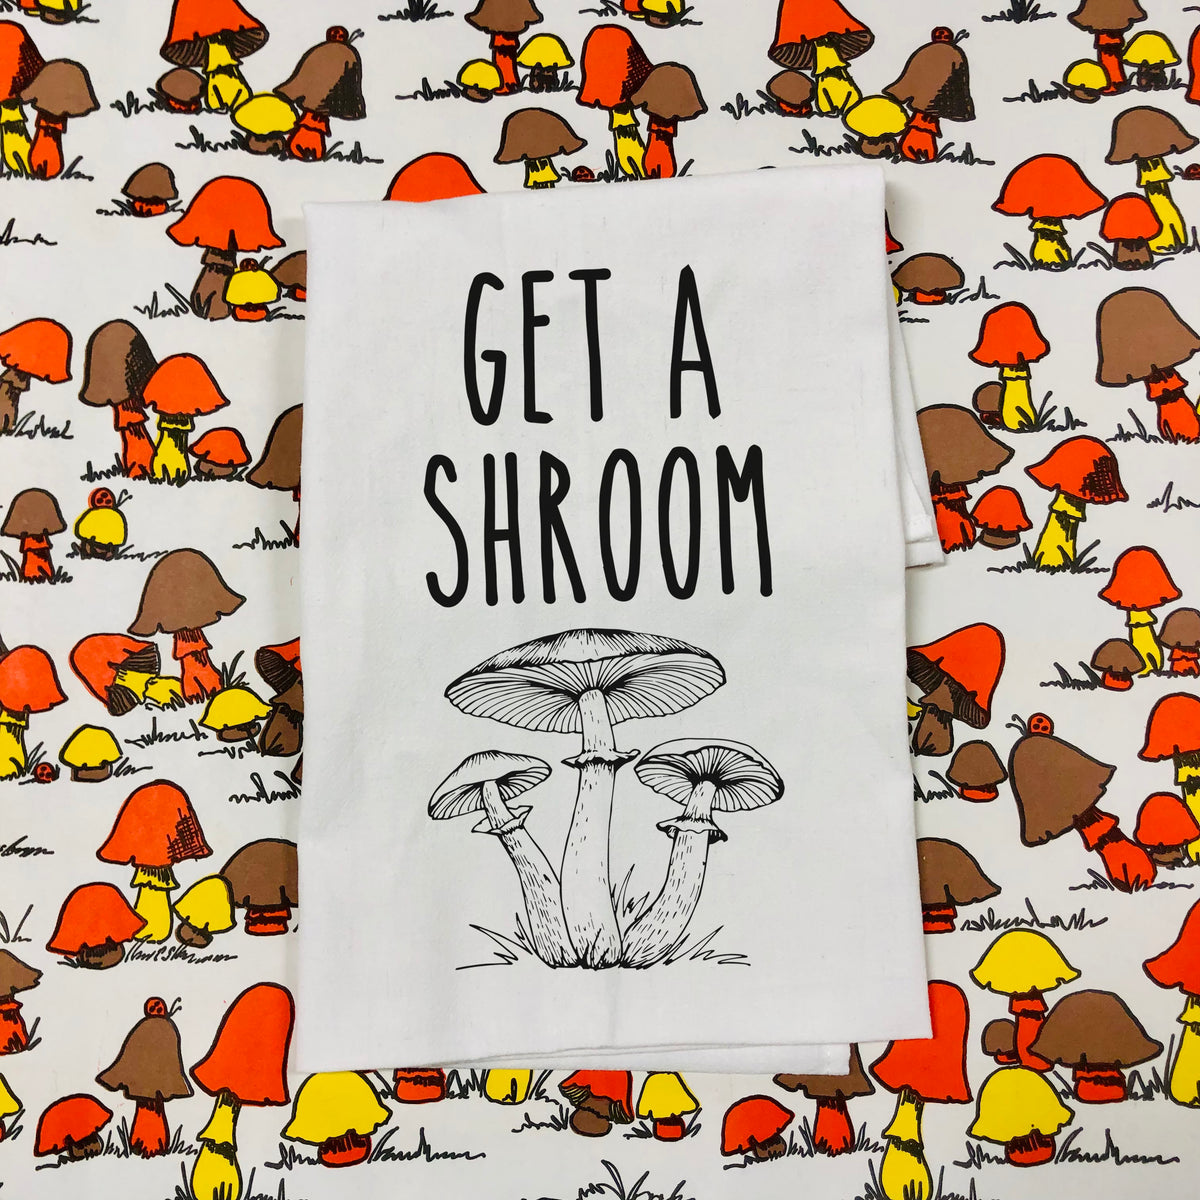 You've Got Mushroom In Your Heart Kitchen Towel